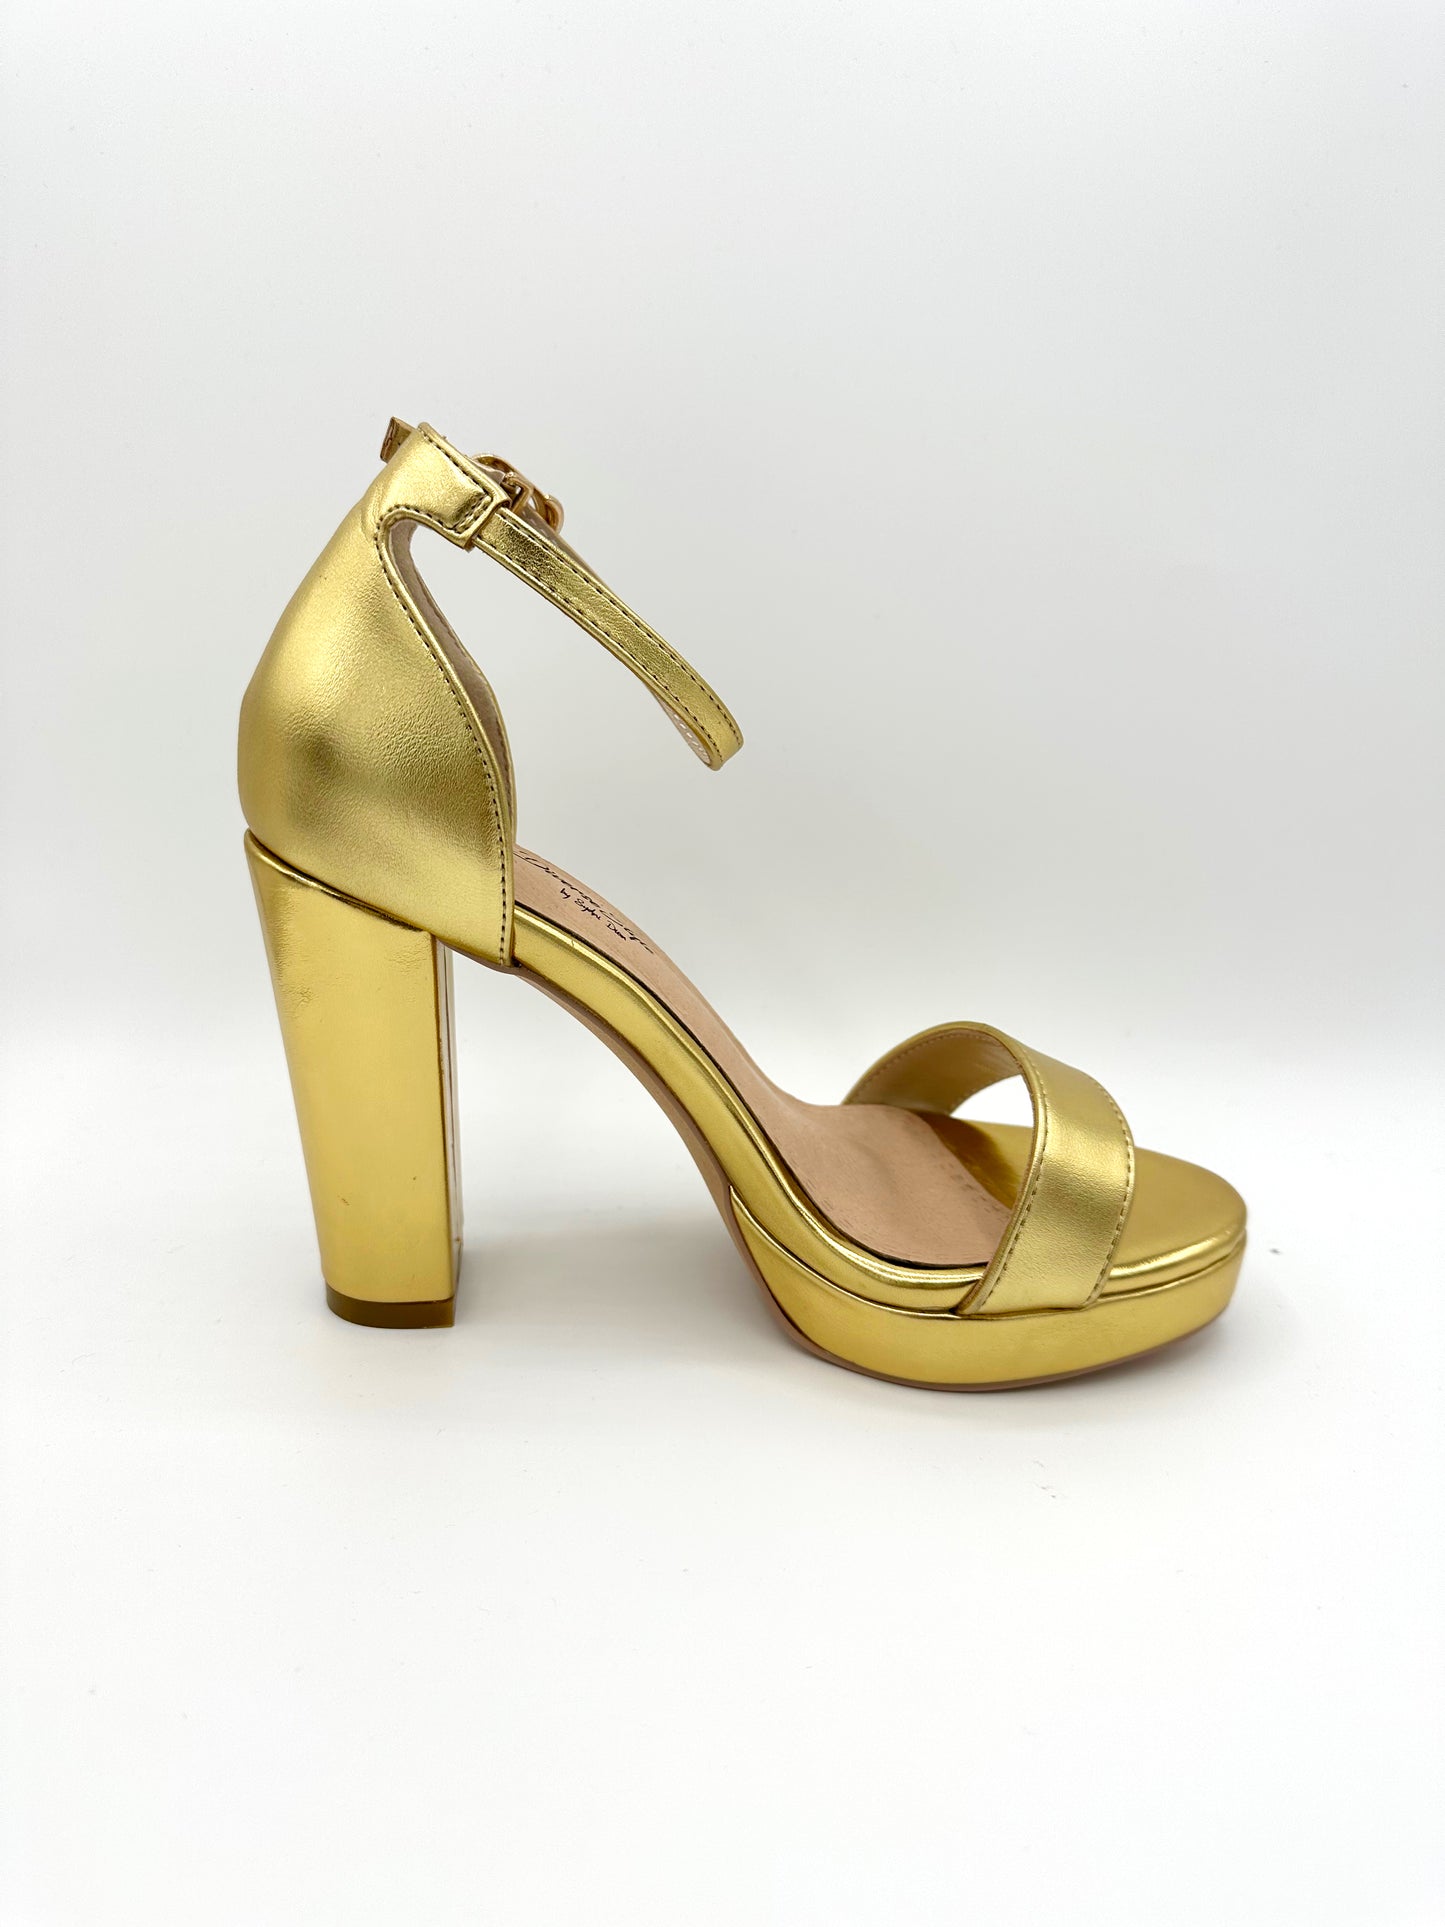 Sweetie Heel - Chrome Gold